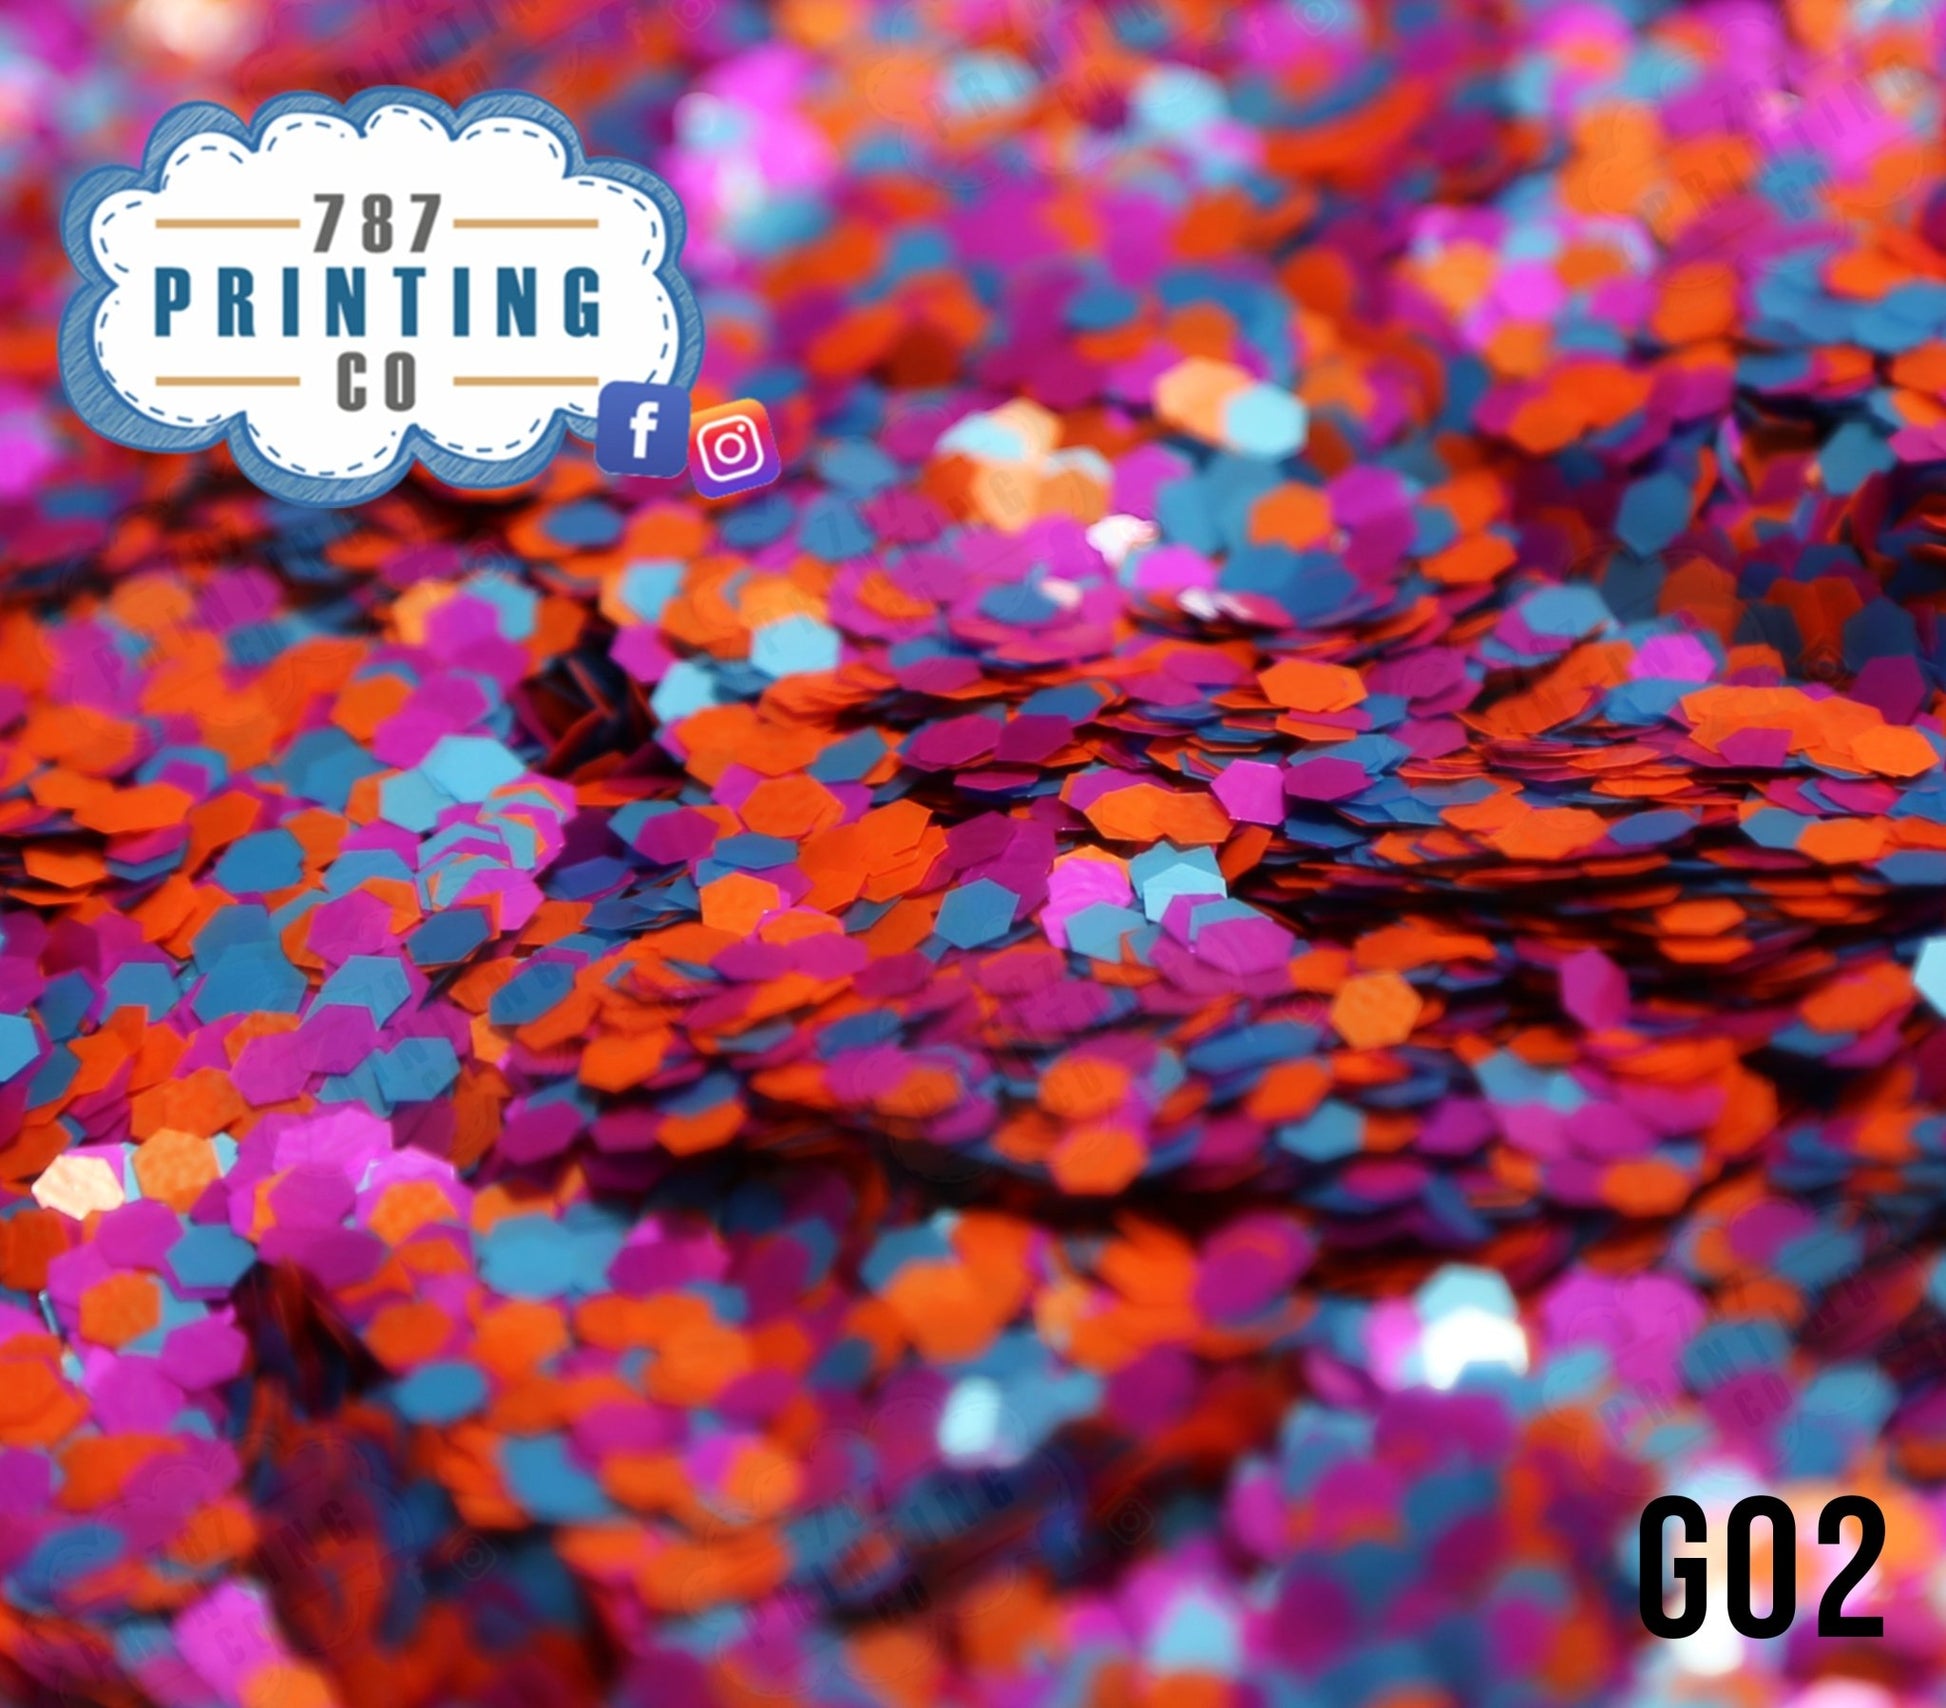 Piñones Mixed Chunky Glitter (G02) - 787 Printing Co.